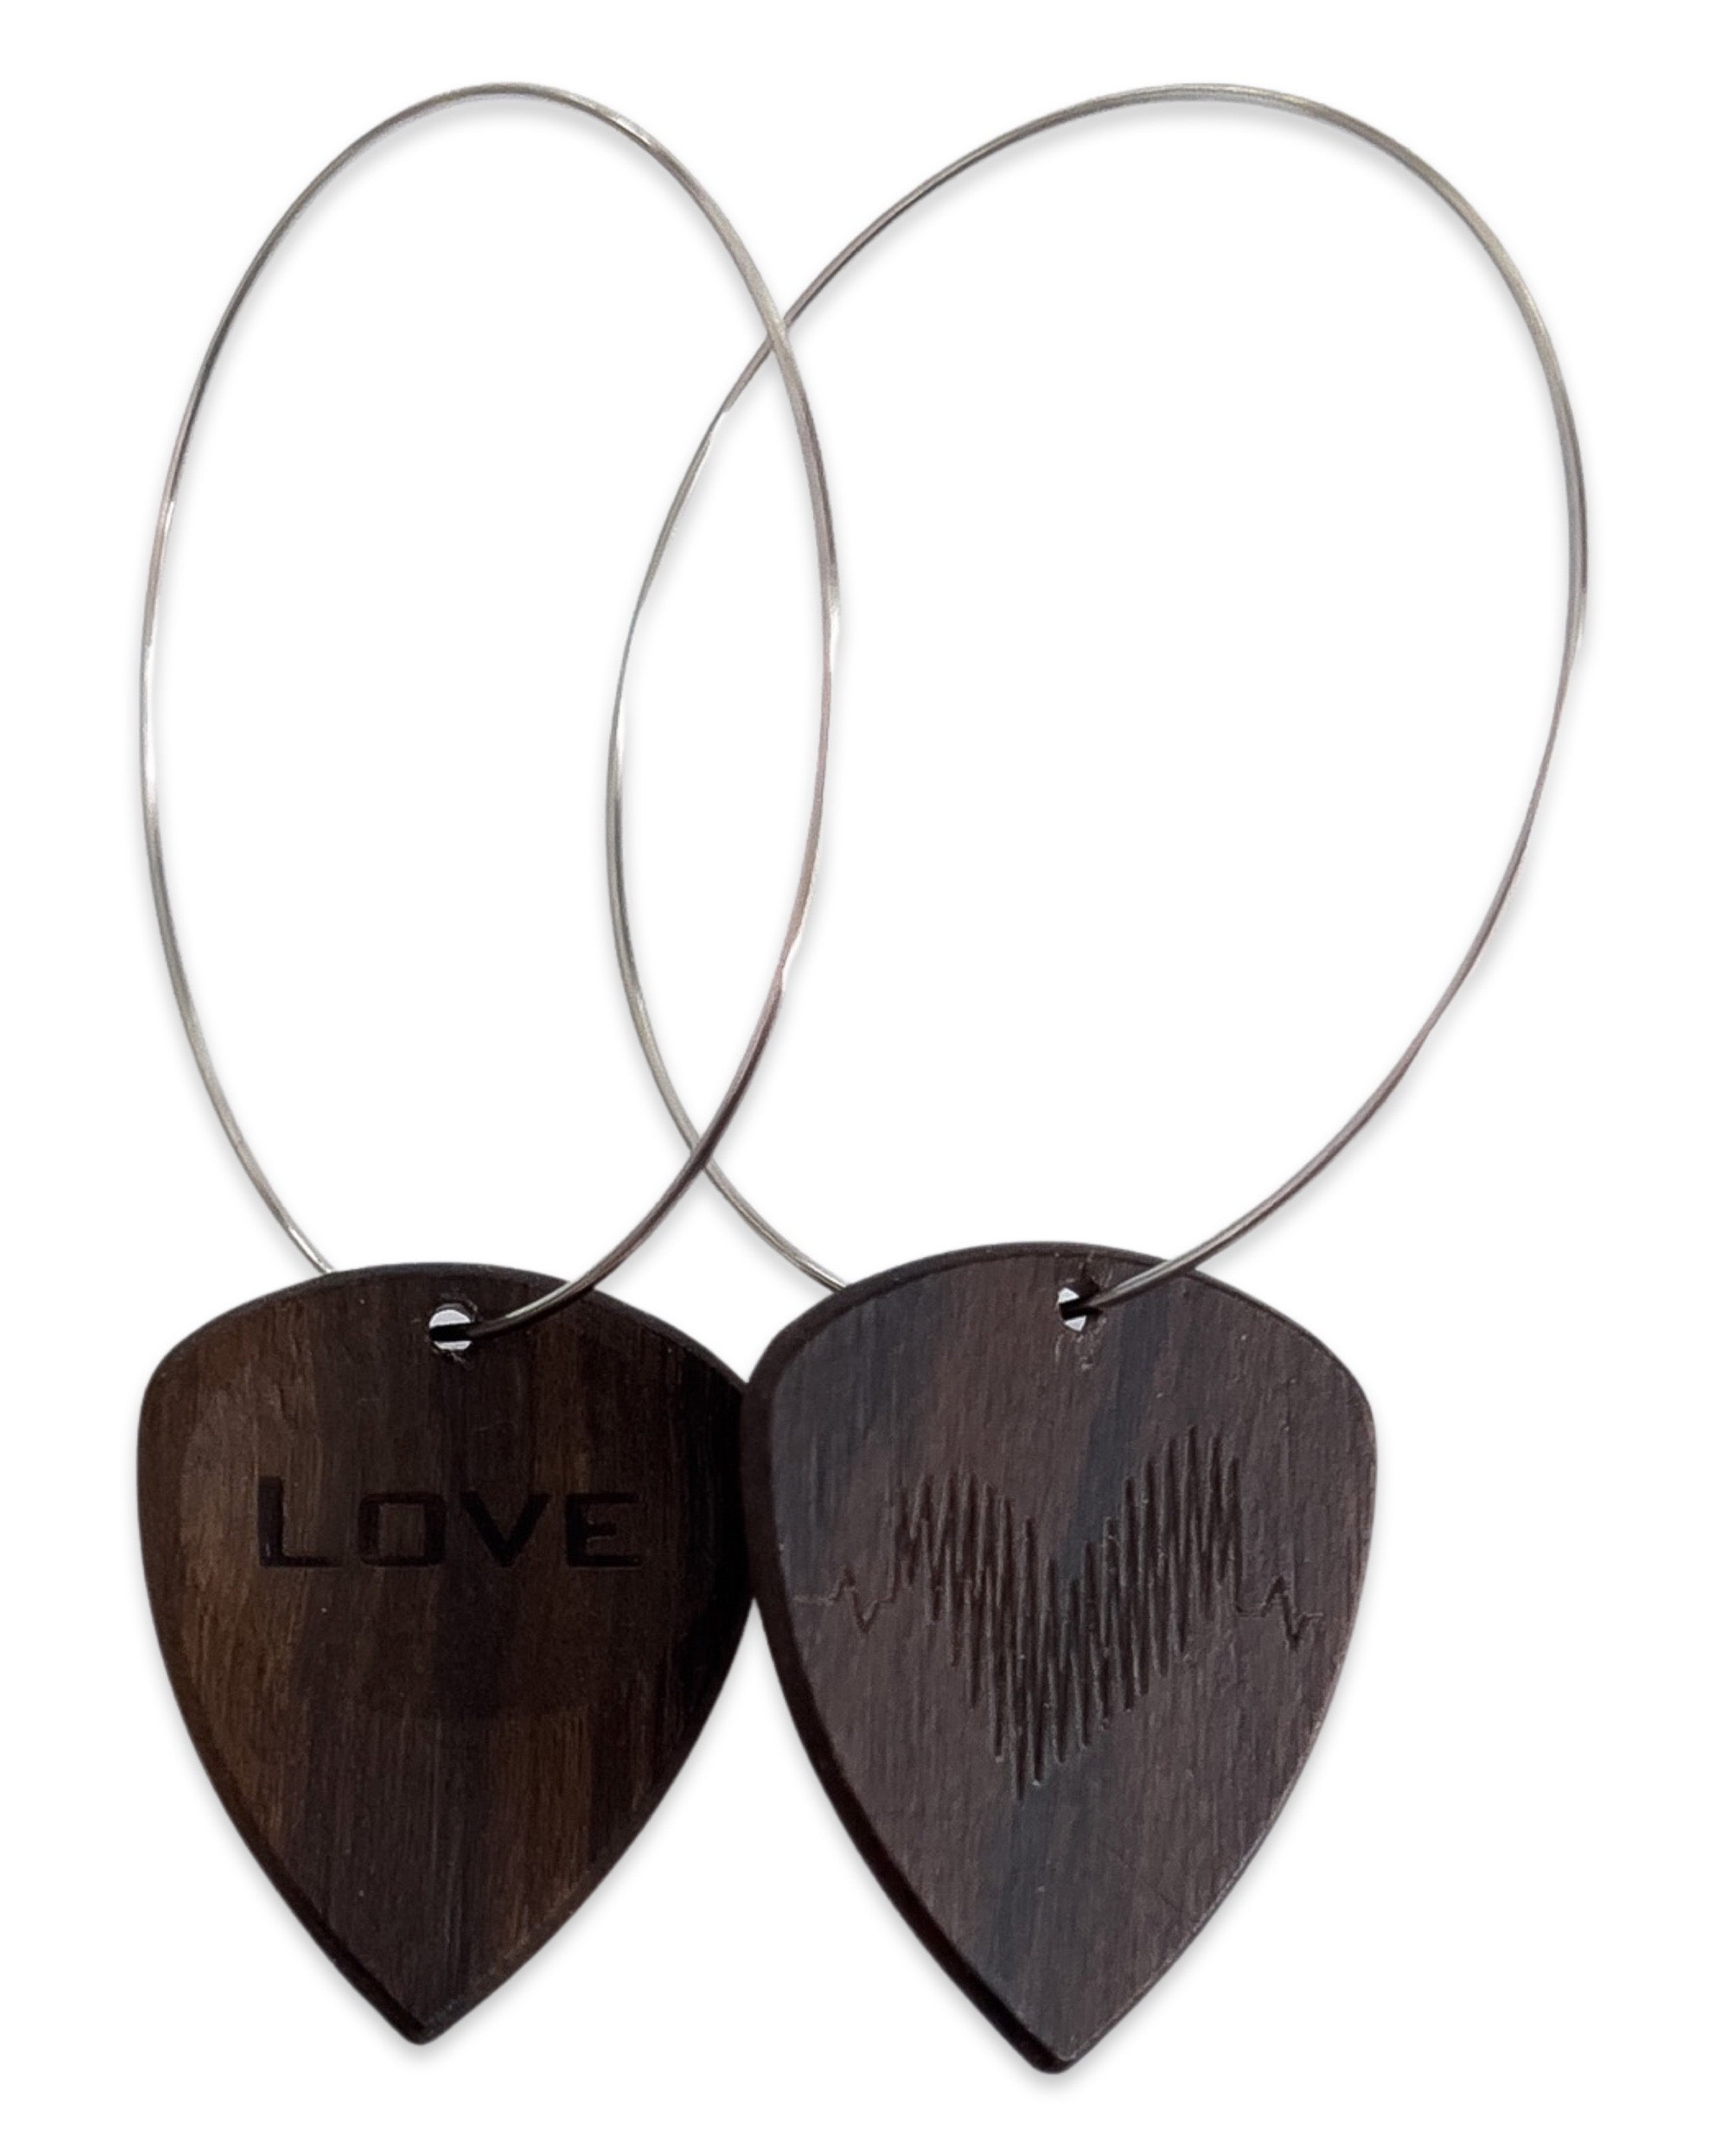 Groupie Love Chacate Preto Wood Single Guitar Pick Earrings